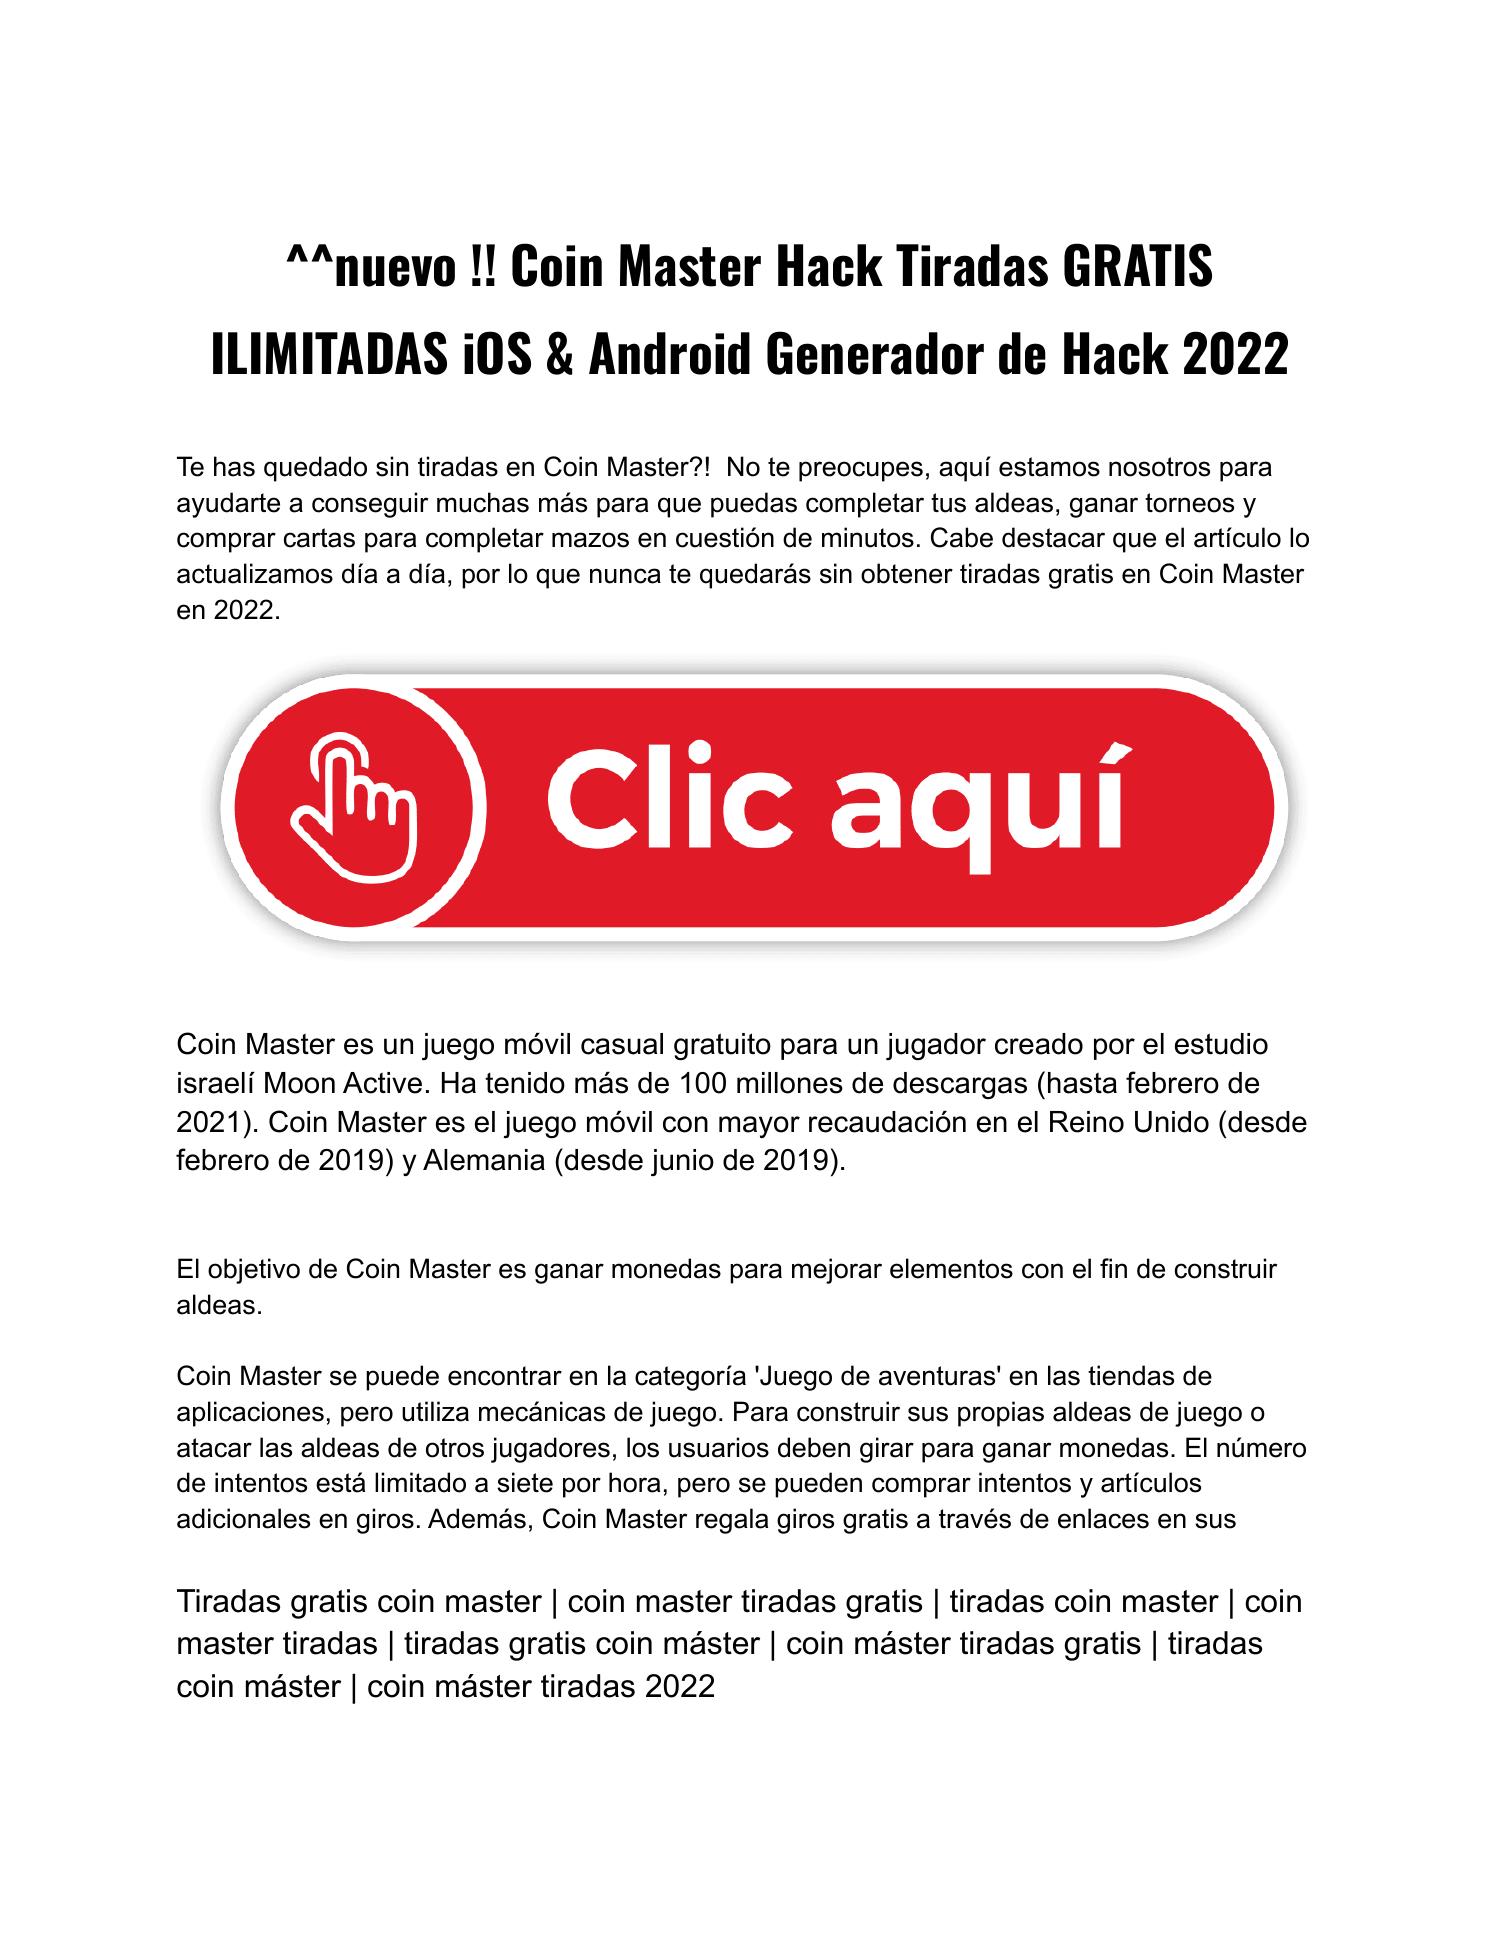 Coin Master Hack Tiradas ILIMITADAS GRATIS 2022.pdf